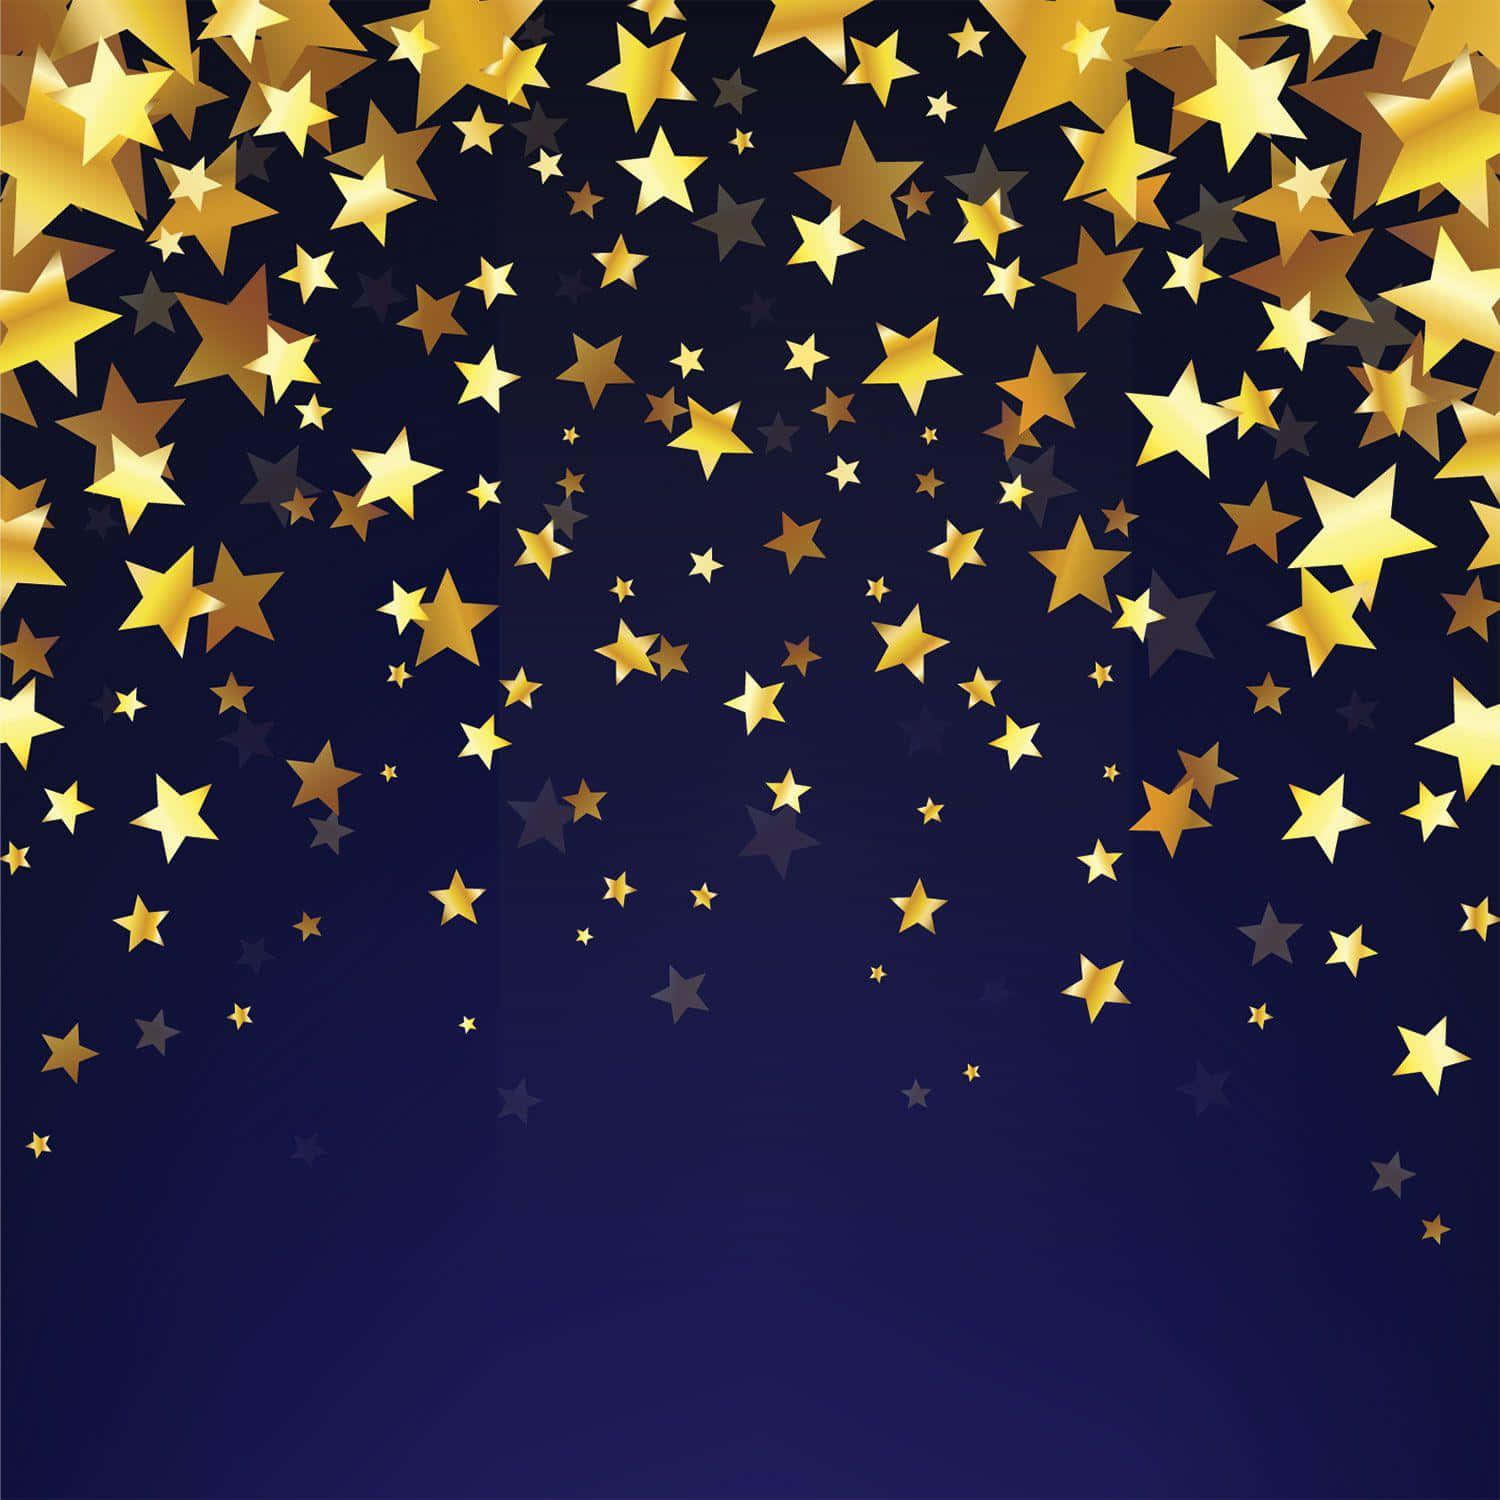 Golden Stars On A Blue Background